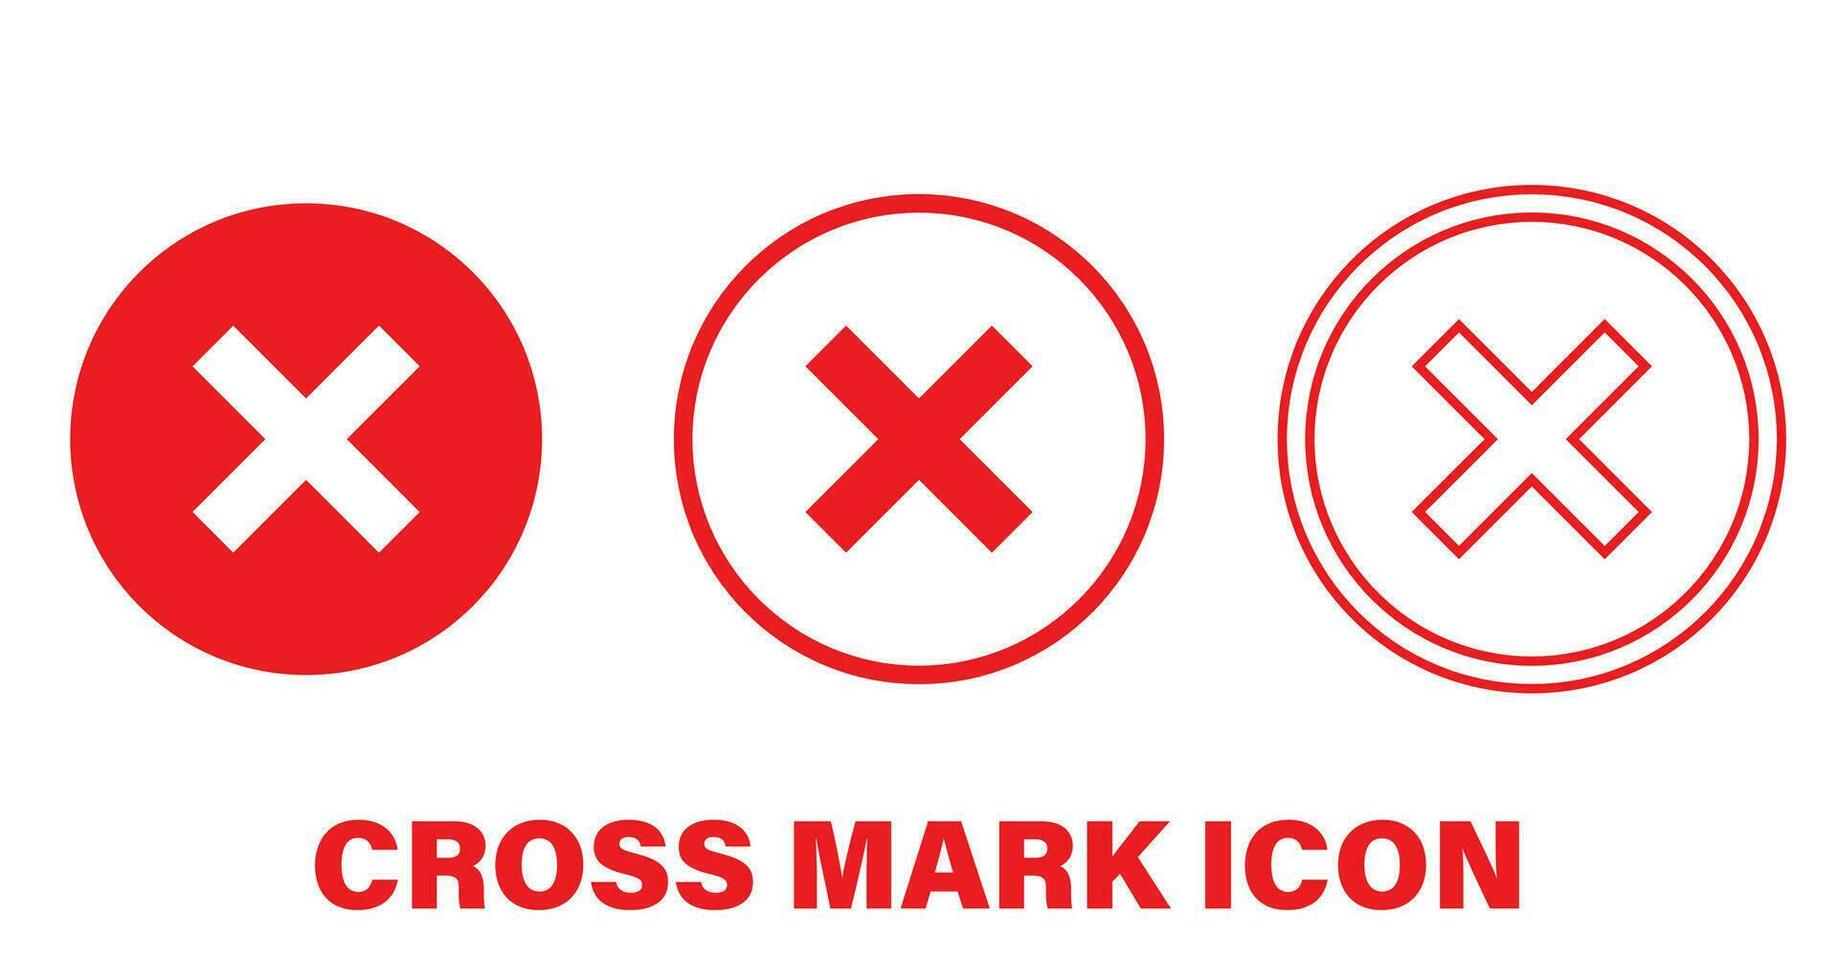 Cross Mark Icon in vector